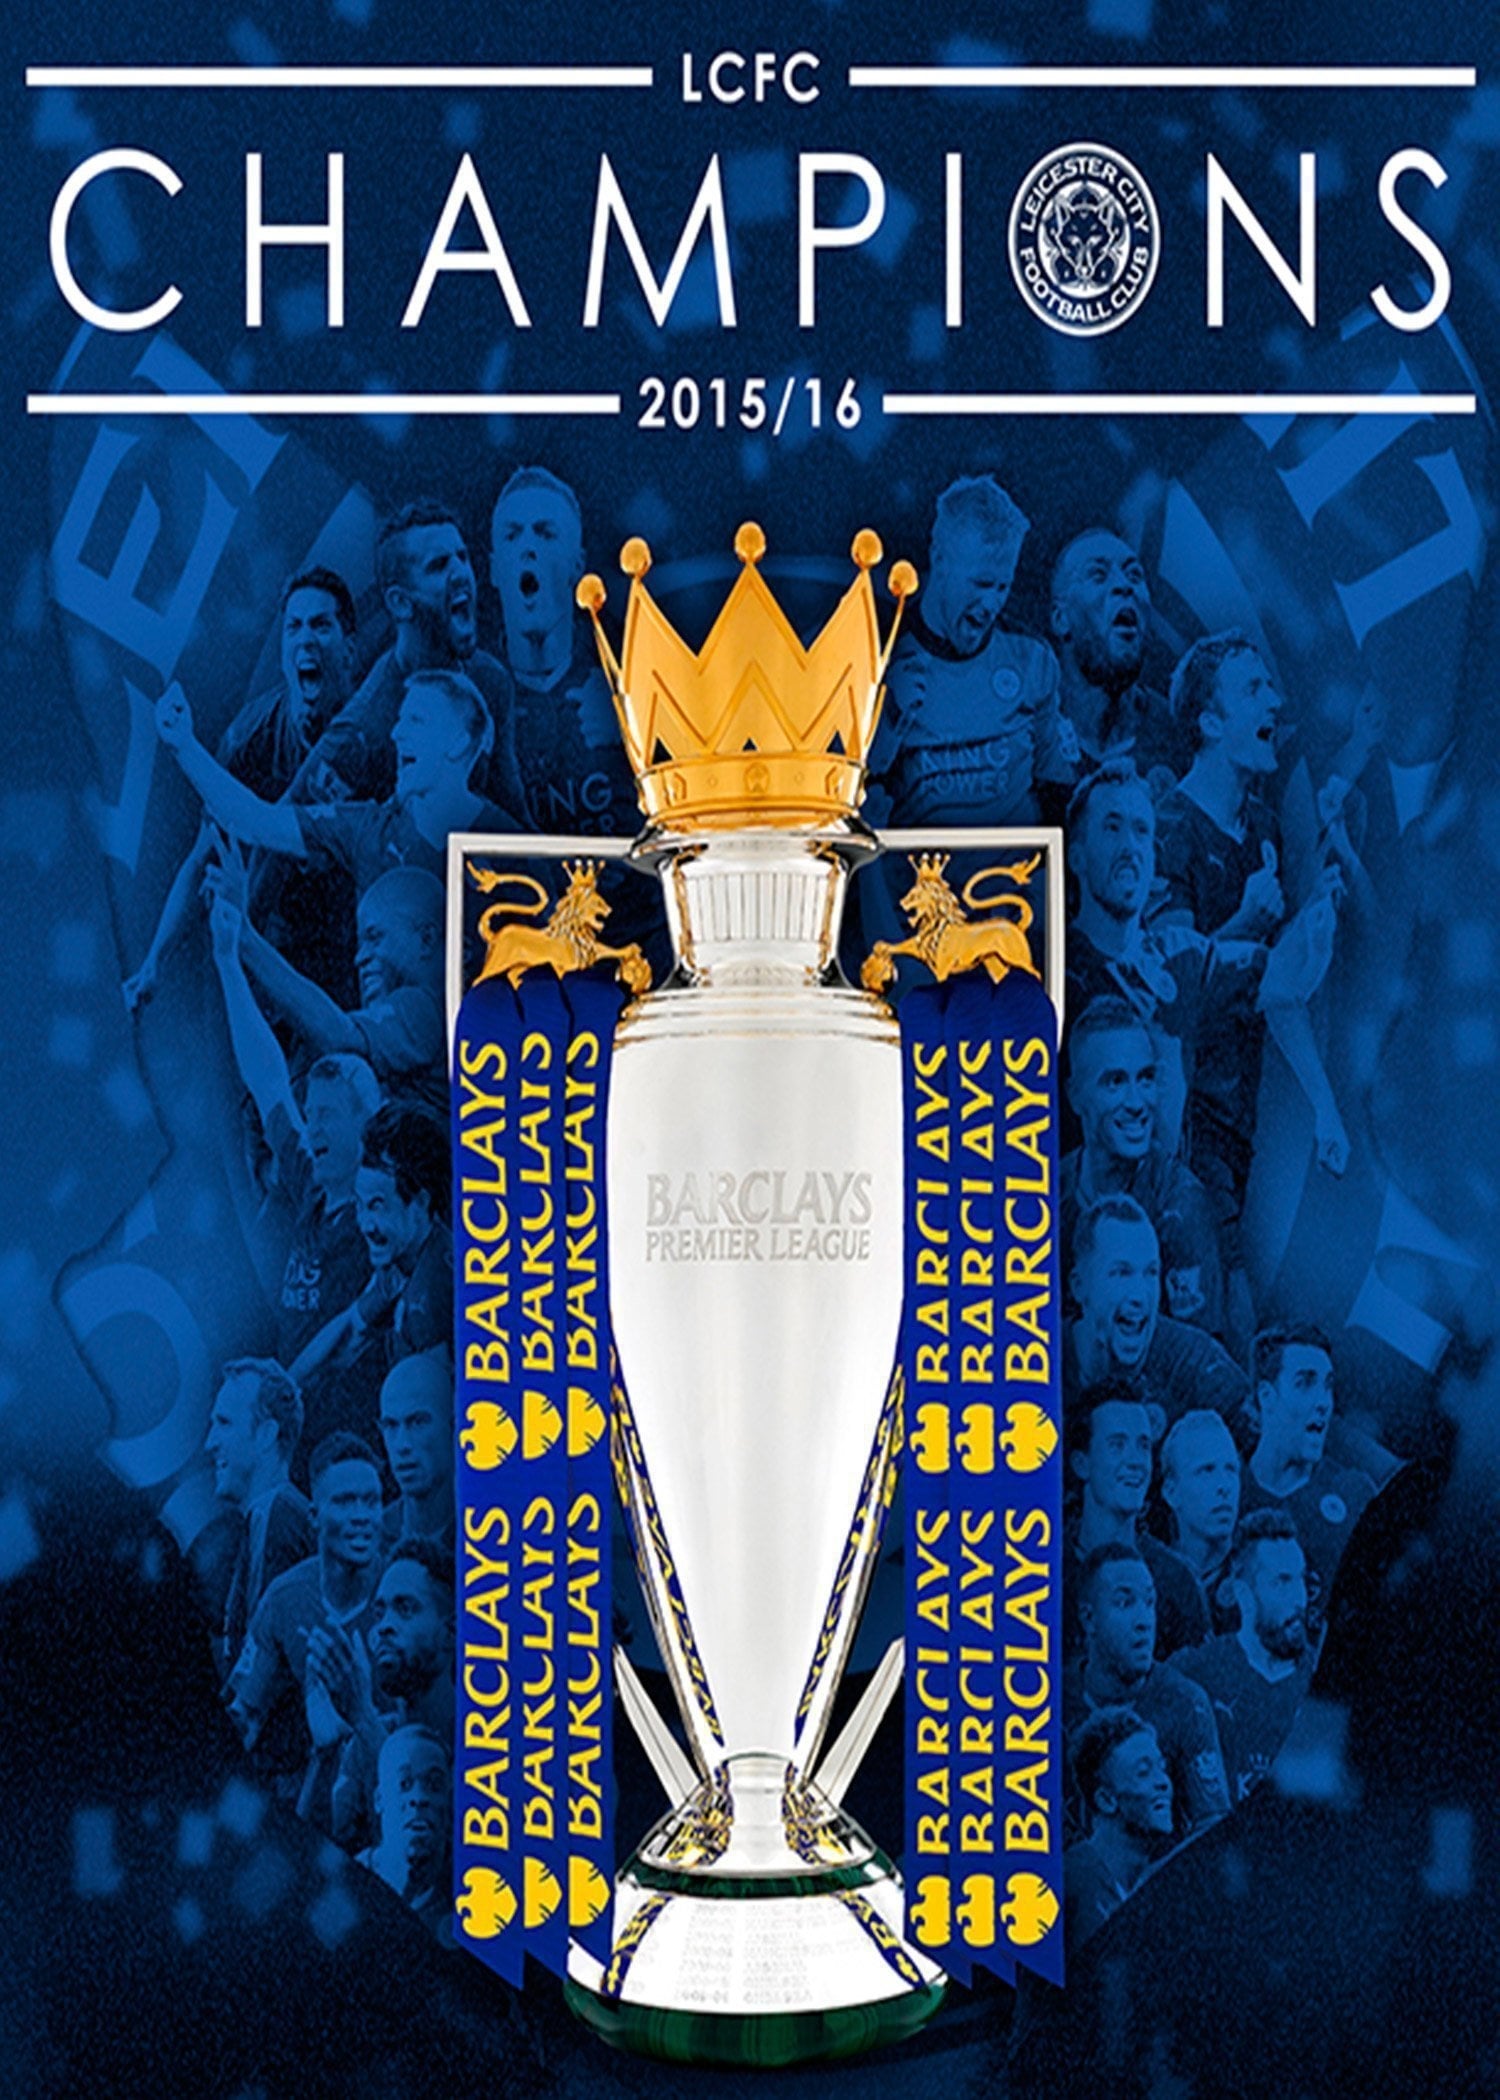 LCFC Champions 2015/16